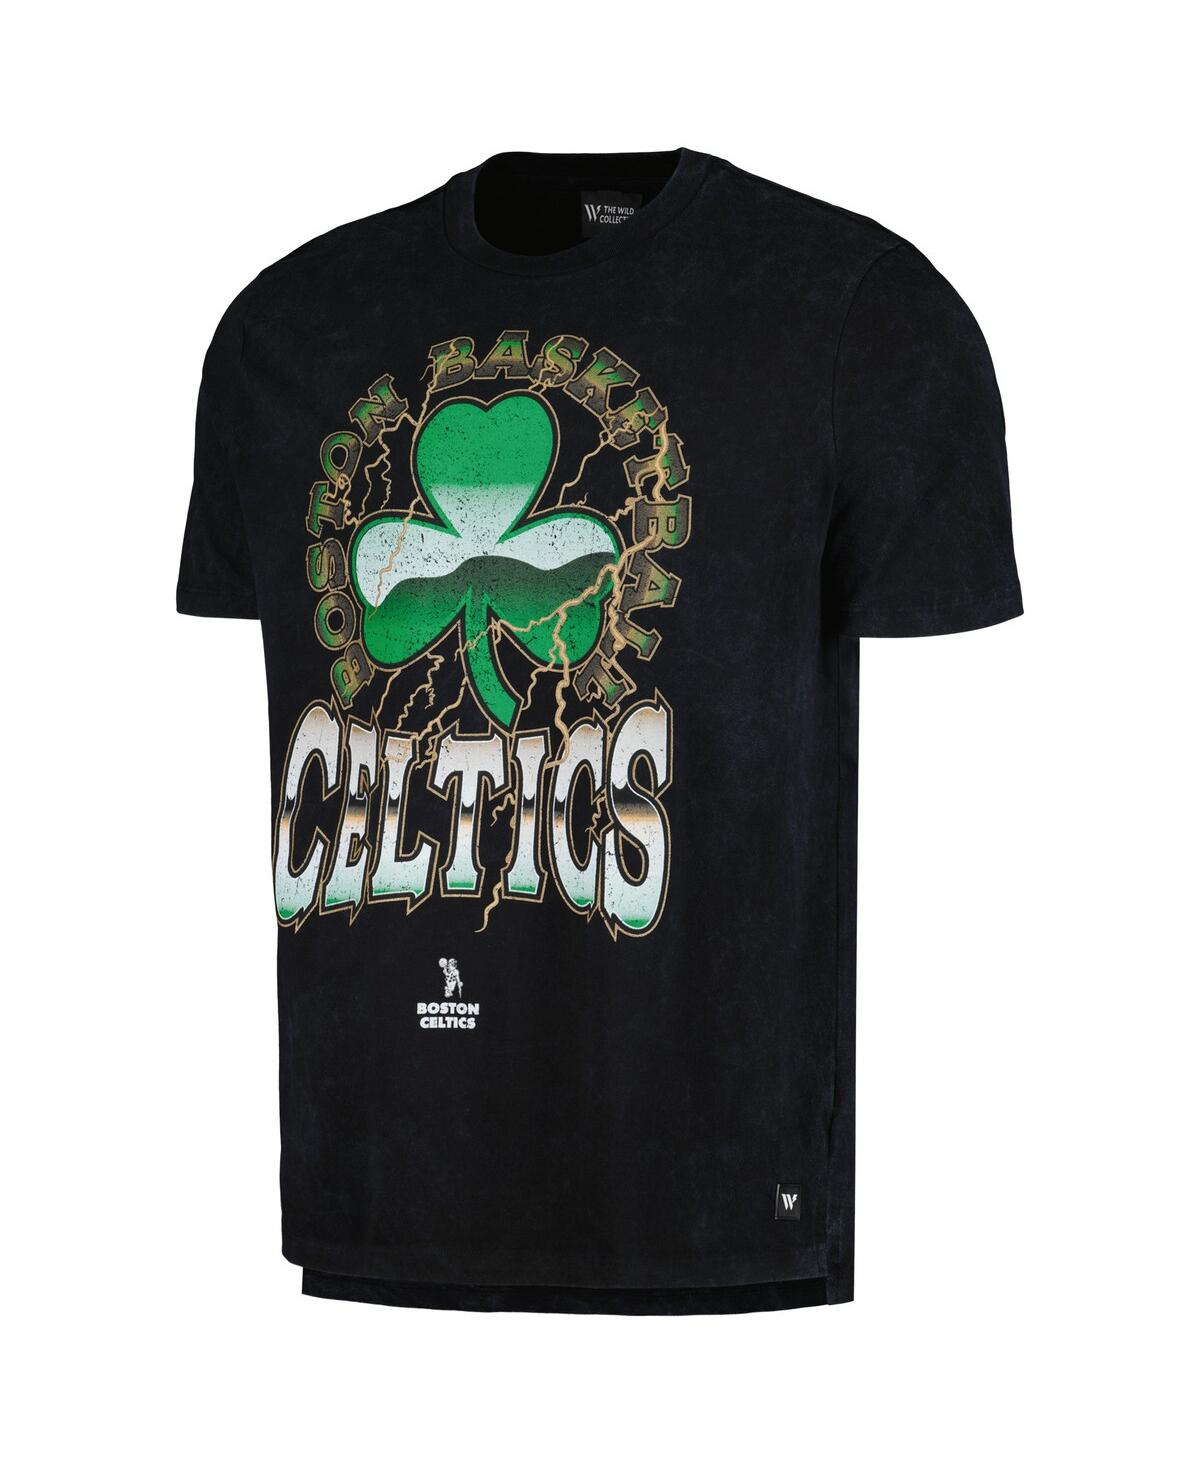 Shop The Wild Collective Men's And Women's  Black Distressed Boston Celtics Tour Band T-shirt